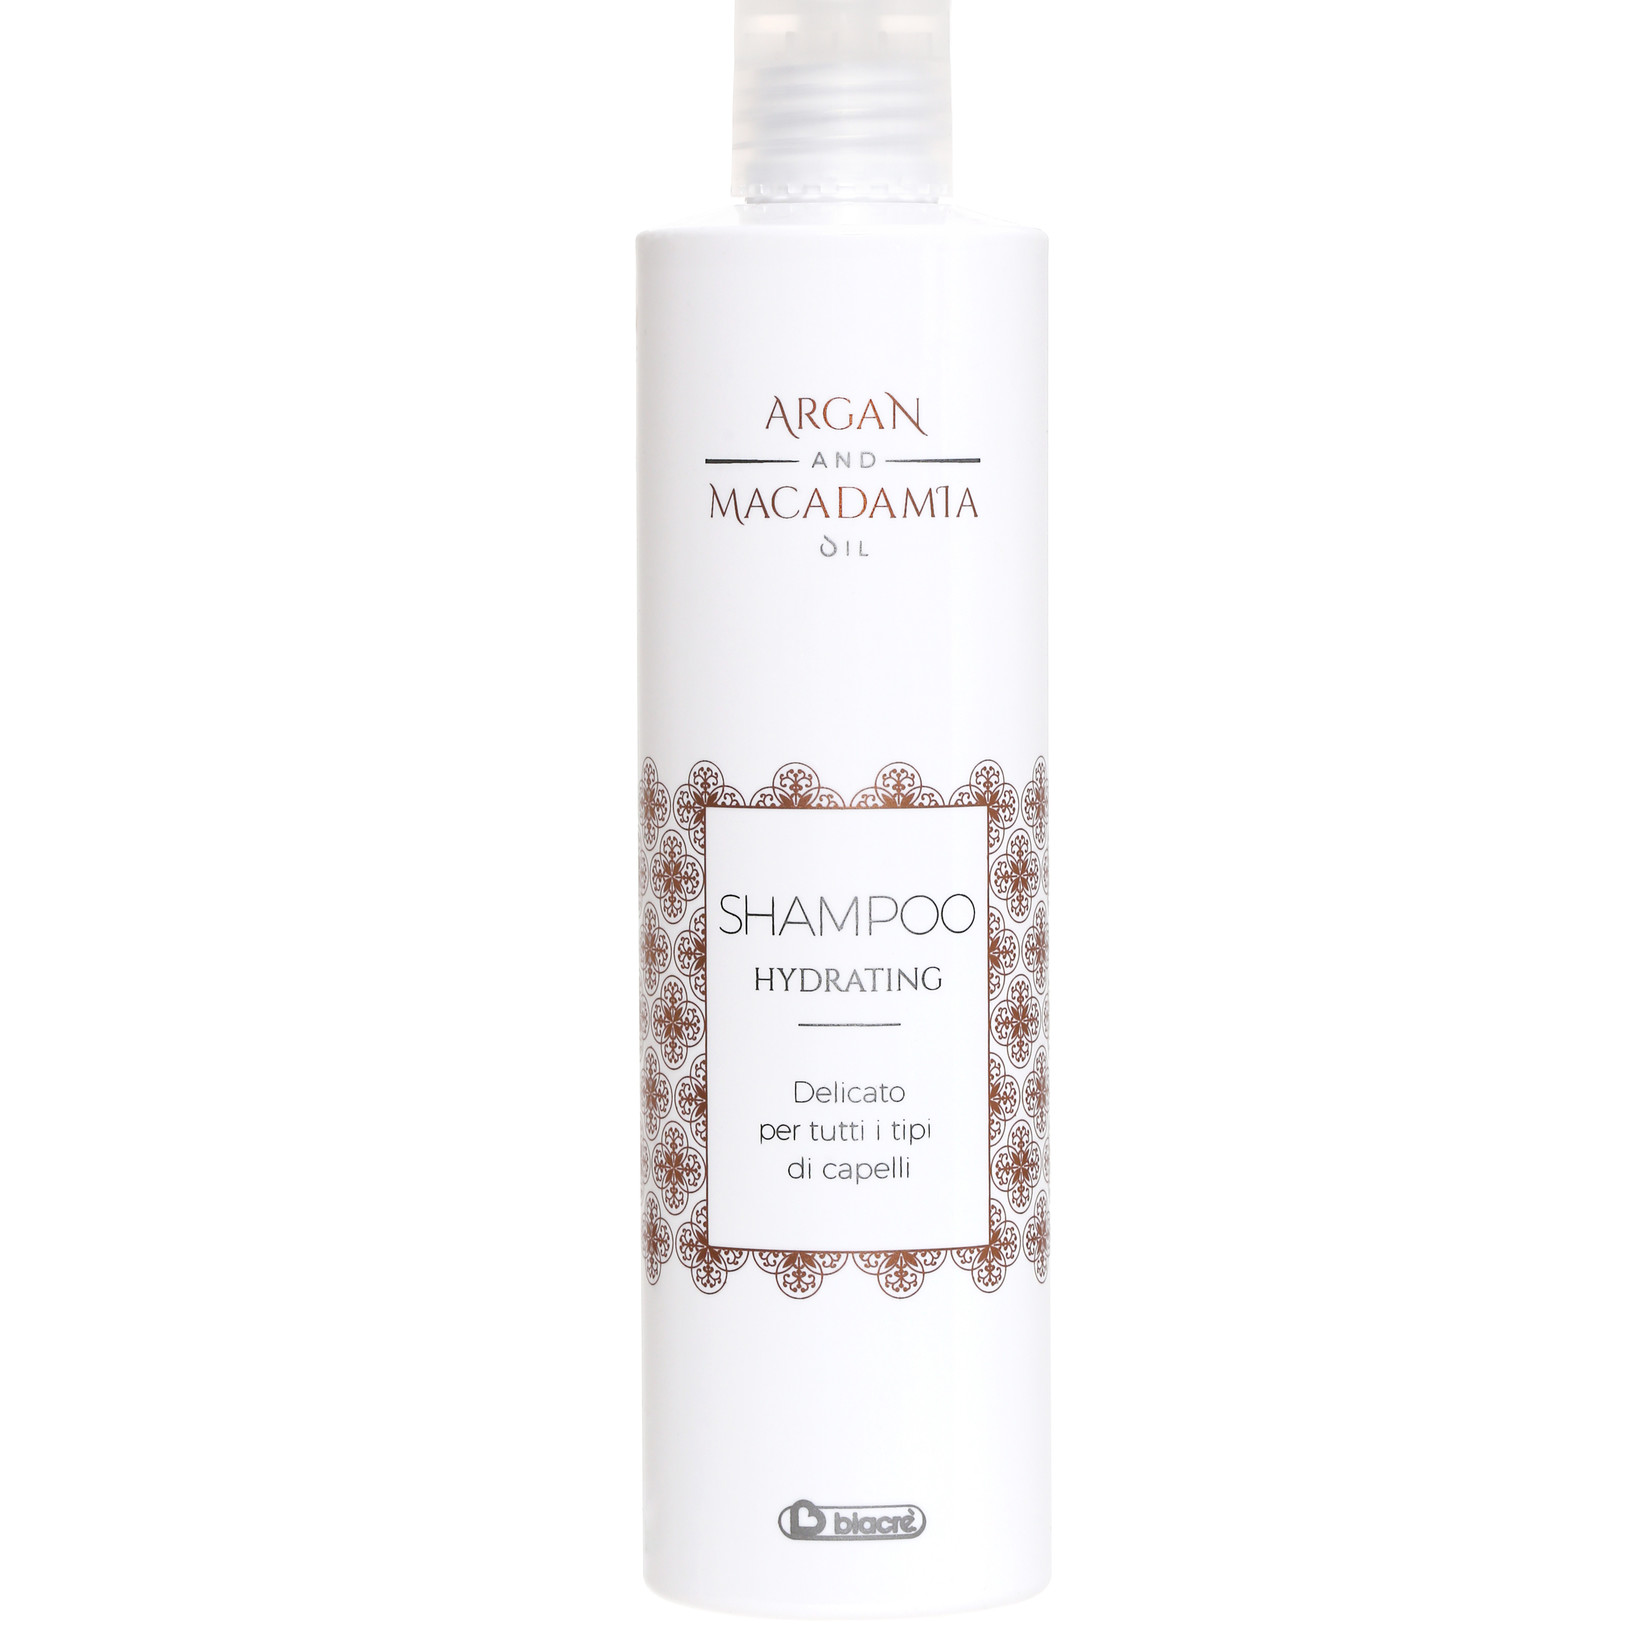 Biacre Argan & Macadamia Shampoo Hydrating 300ml